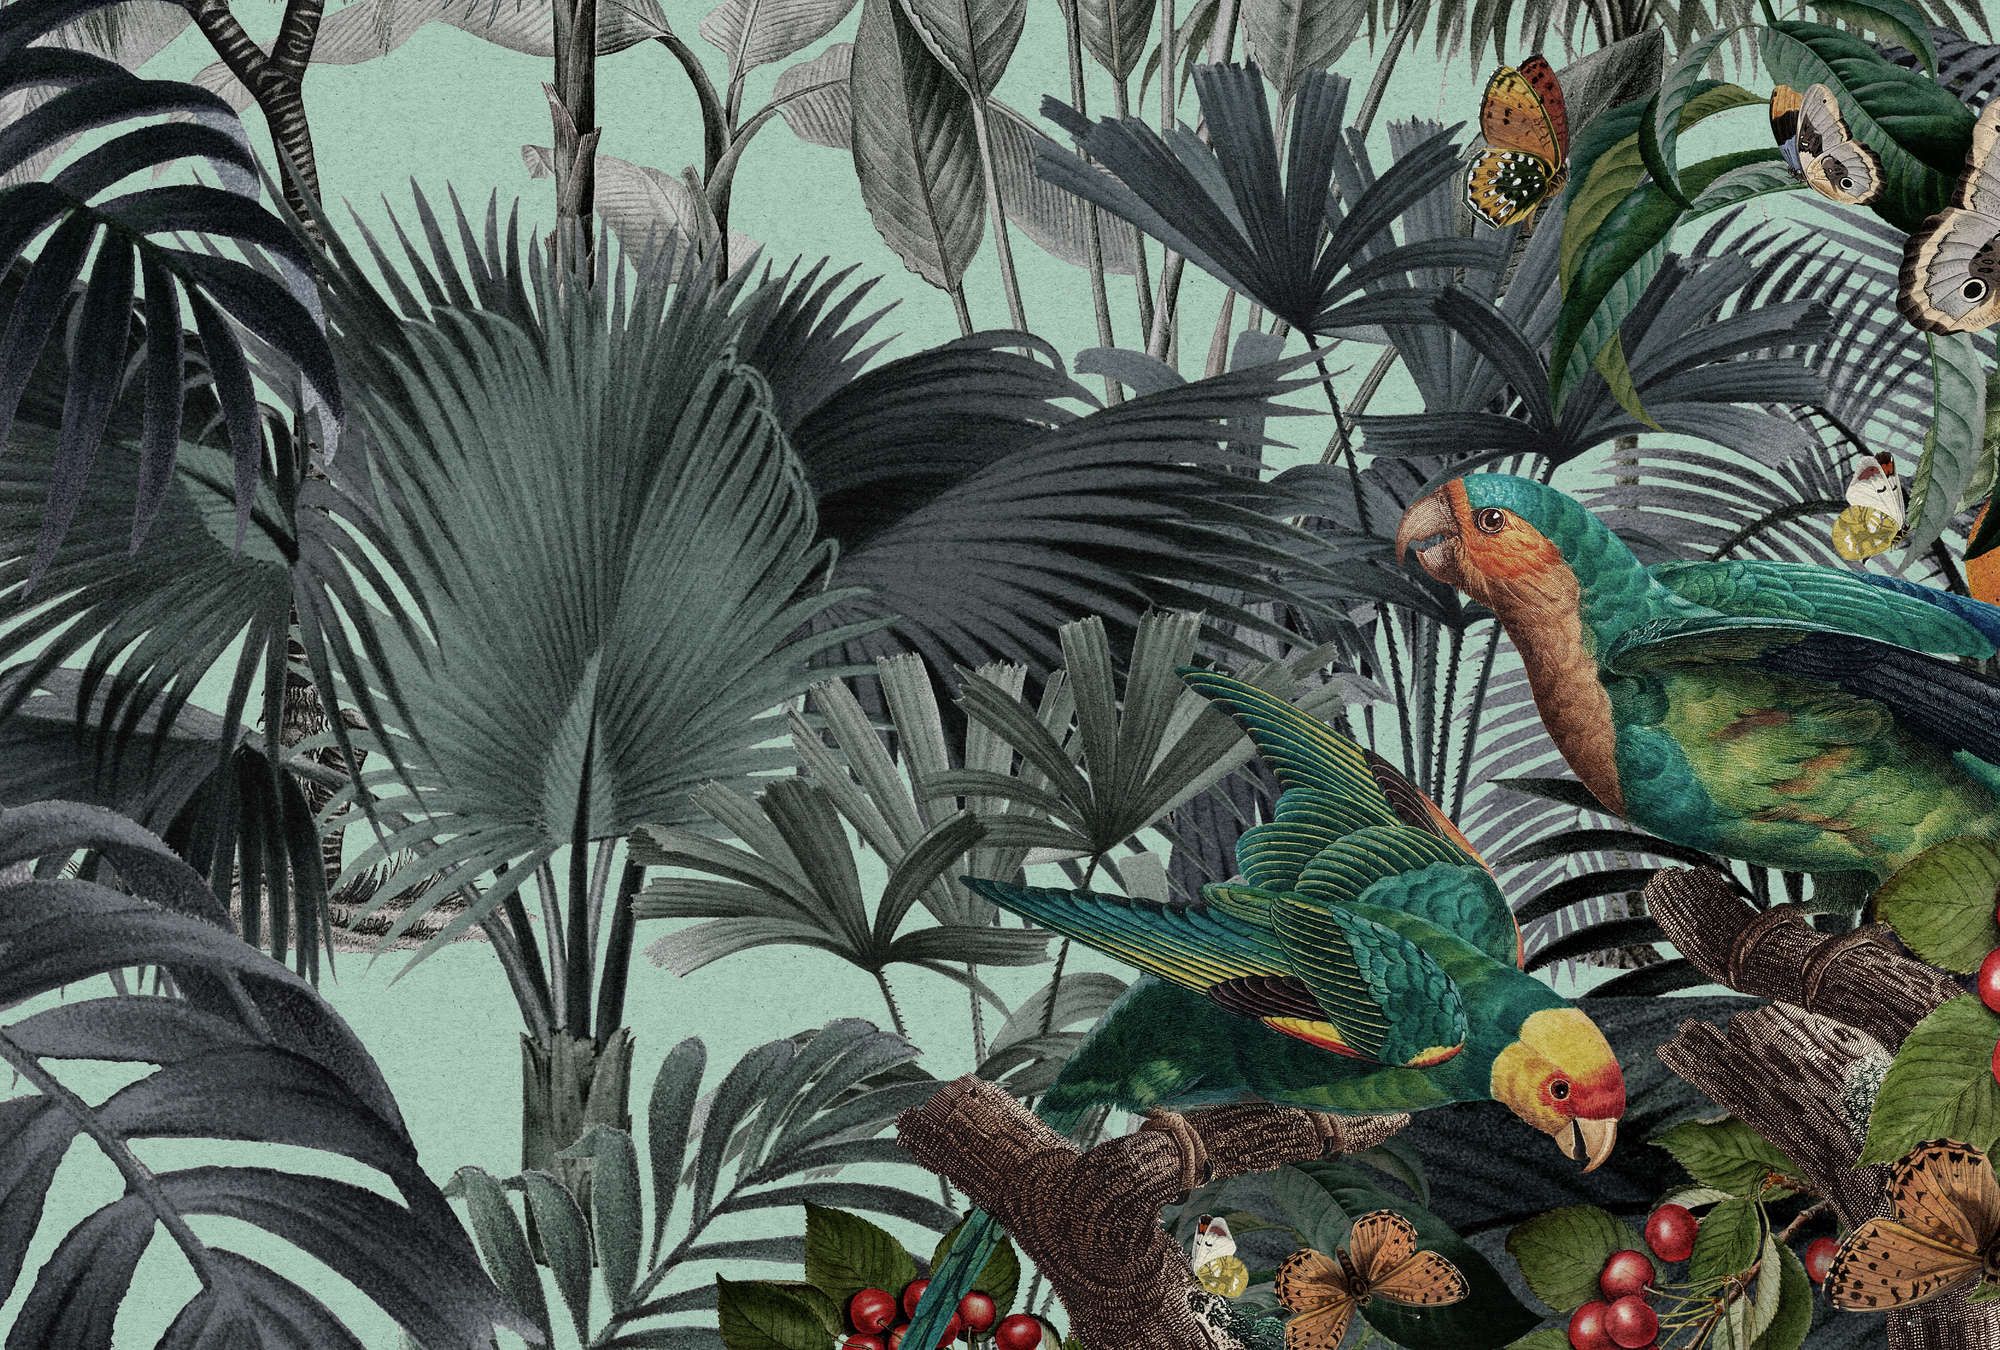             Photo wallpaper »arabella« - Jungle & parrots on kraft paper look - Smooth, slightly shiny premium non-woven fabric
        